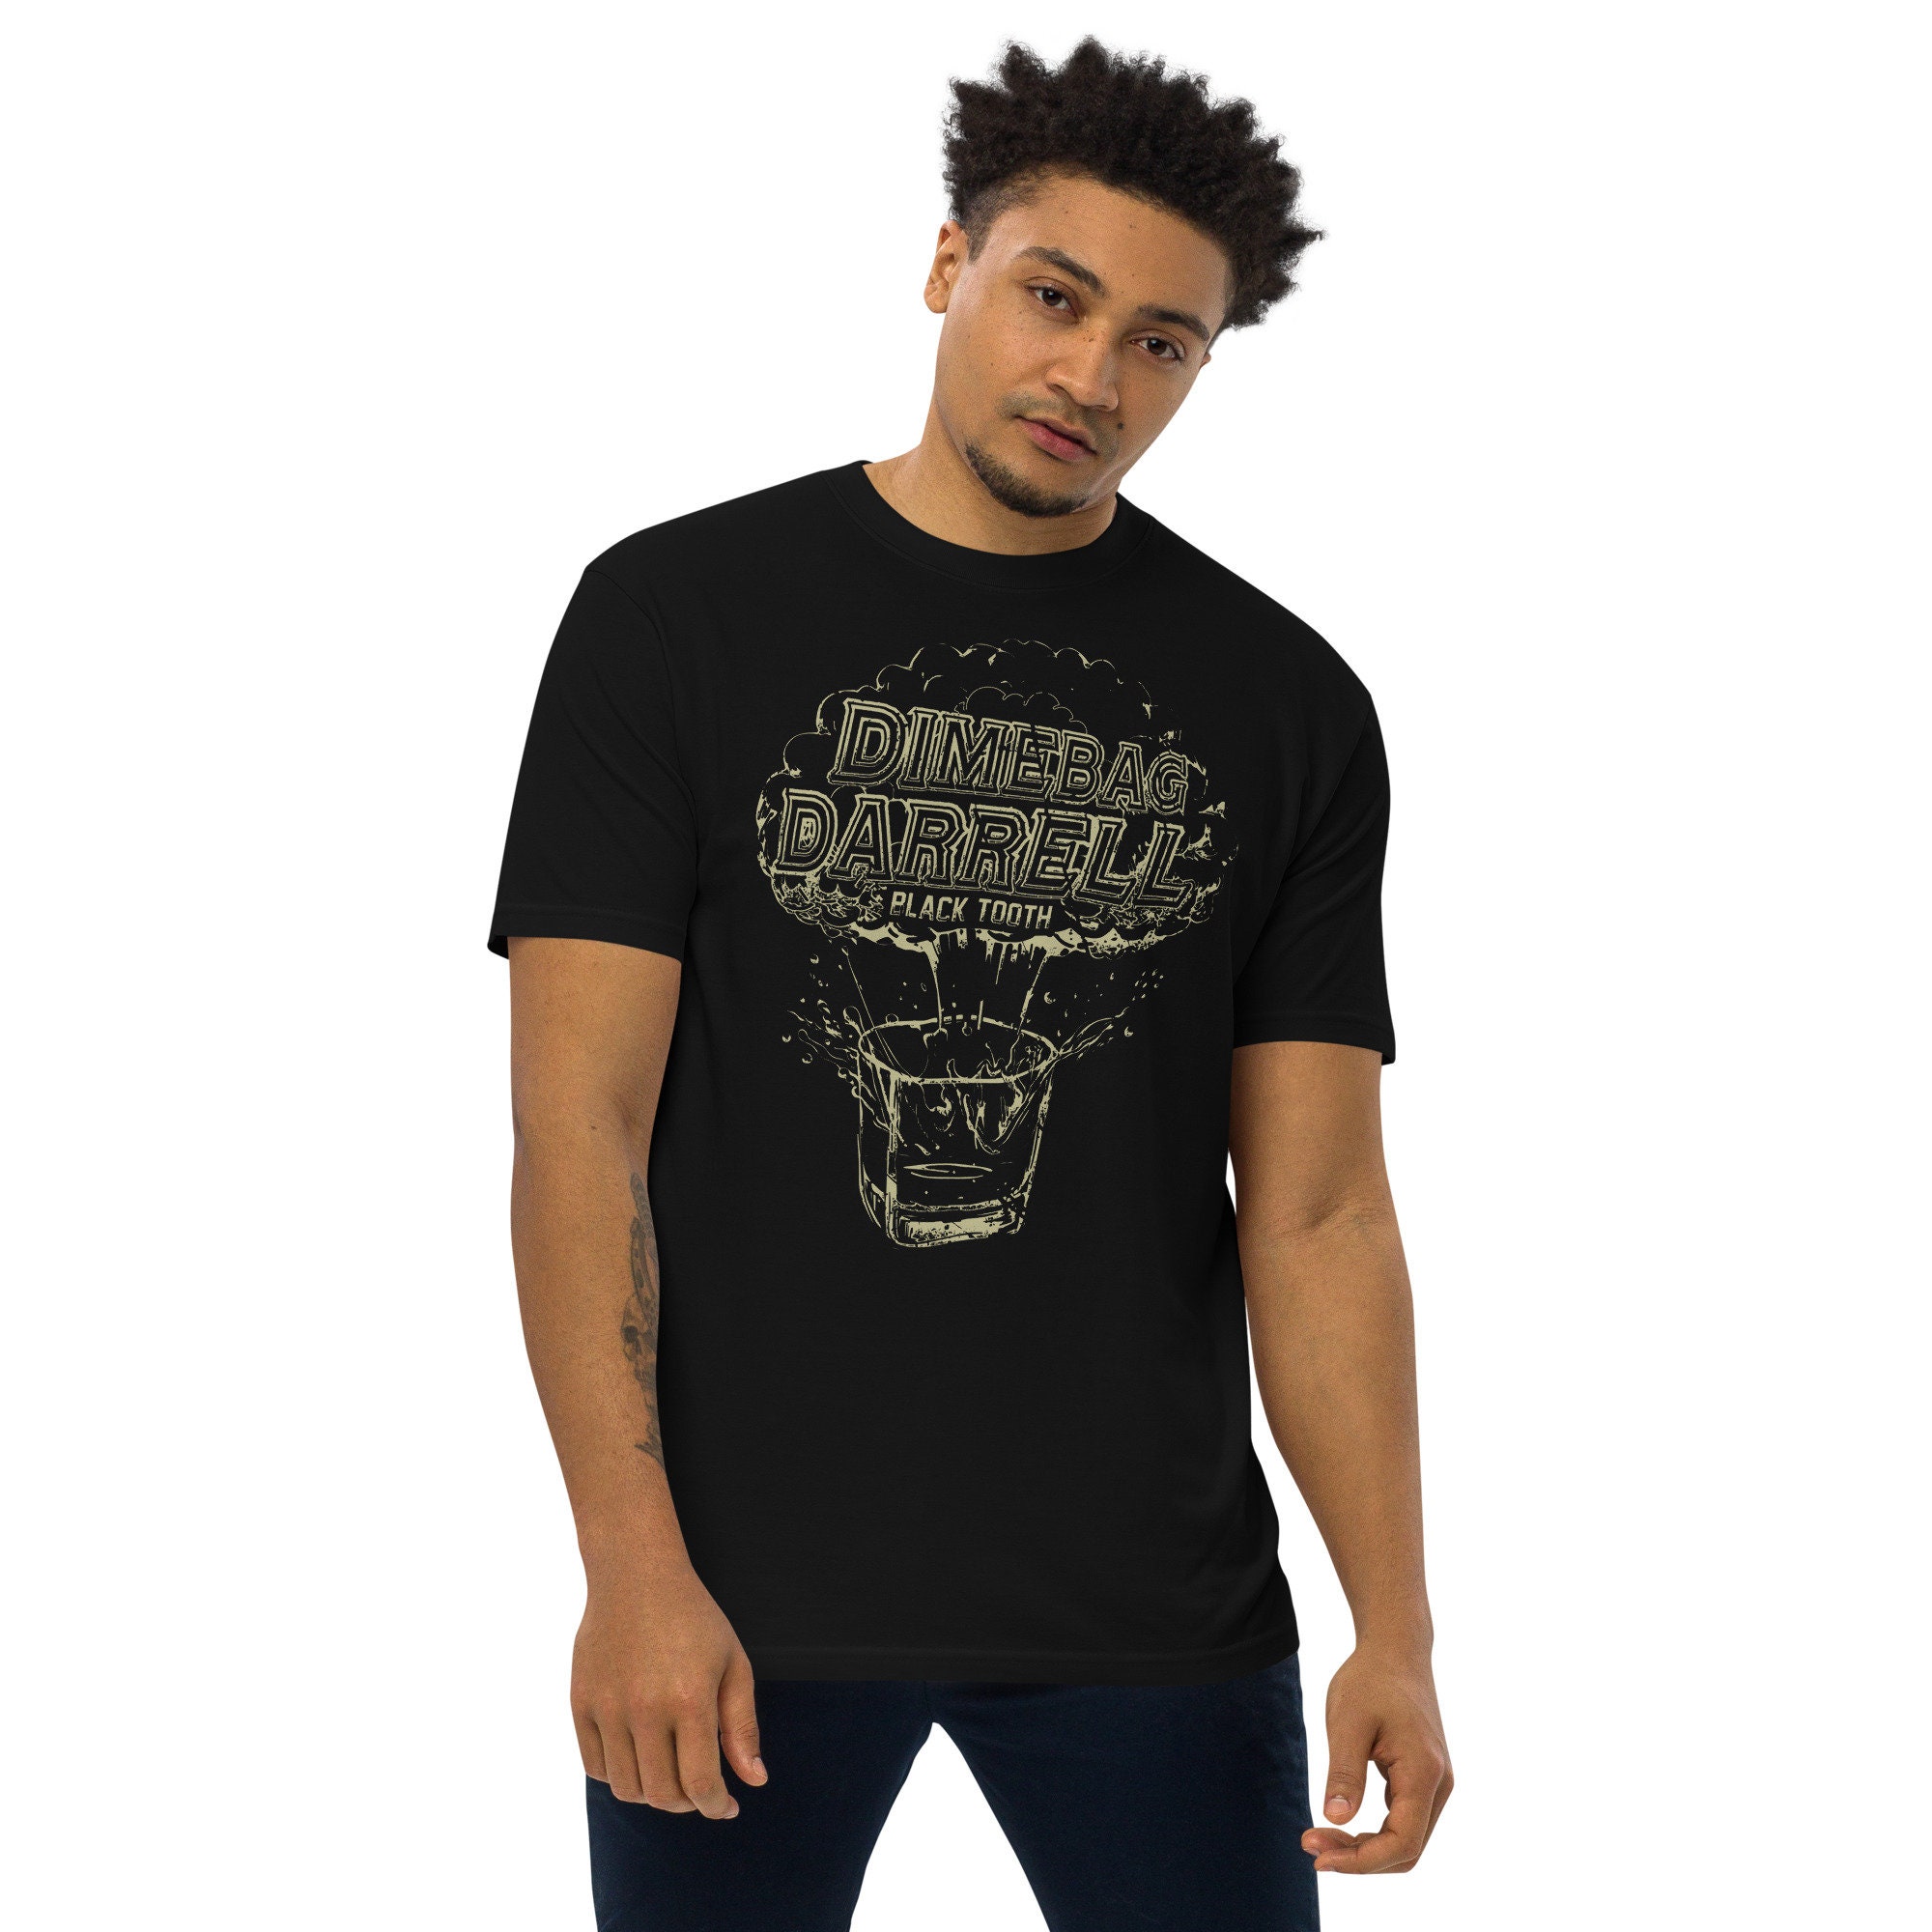 Dimebag Darrell Razor Necklace Graphic T-Shirt Essential T-Shirt